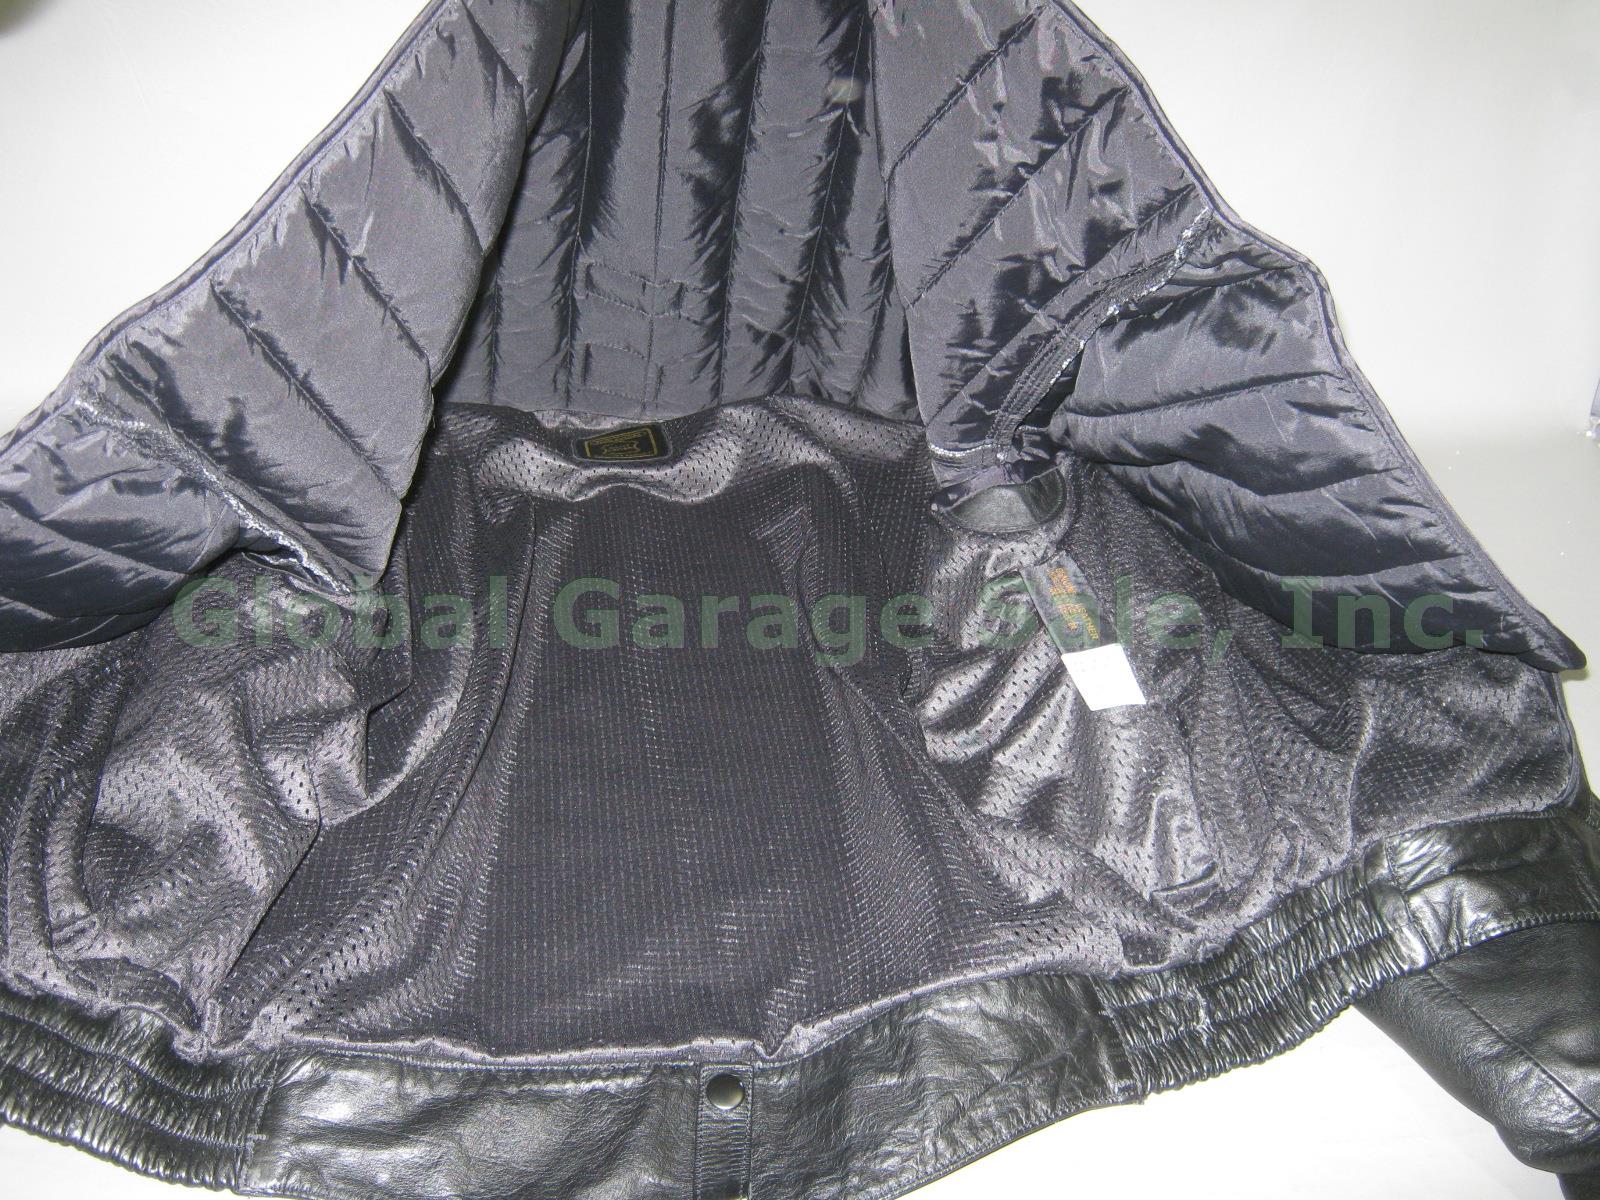 Hein Gericke Black Leather Motorcycle Suit Jacket W/ Liner 44 Boot Cut Pants 36 6